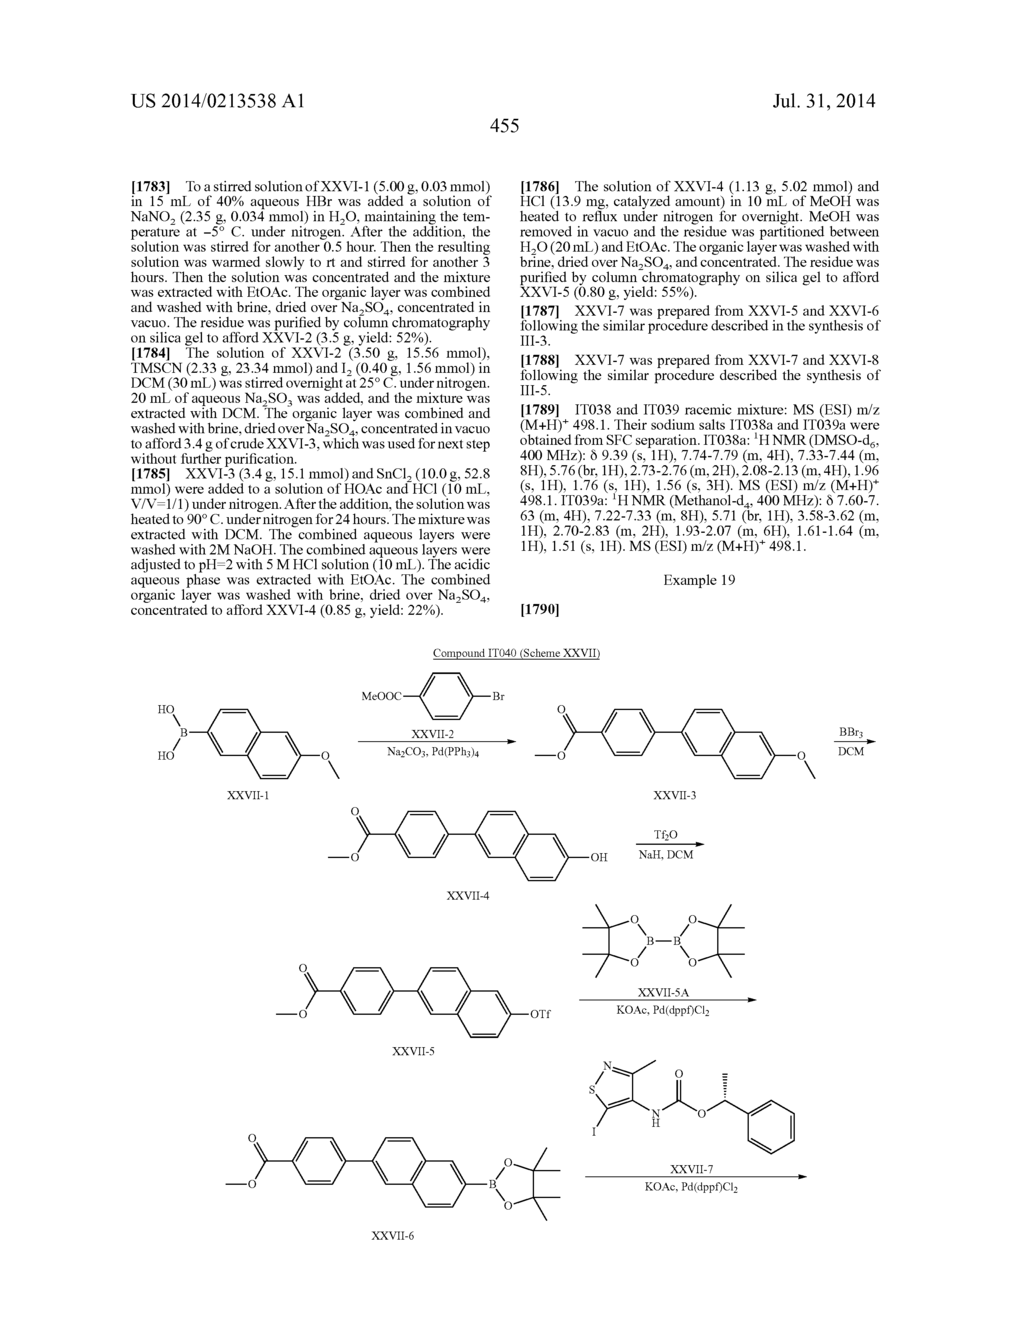 LYSOPHOSPHATIDIC ACID RECEPTOR ANTAGONISTS - diagram, schematic, and image 456